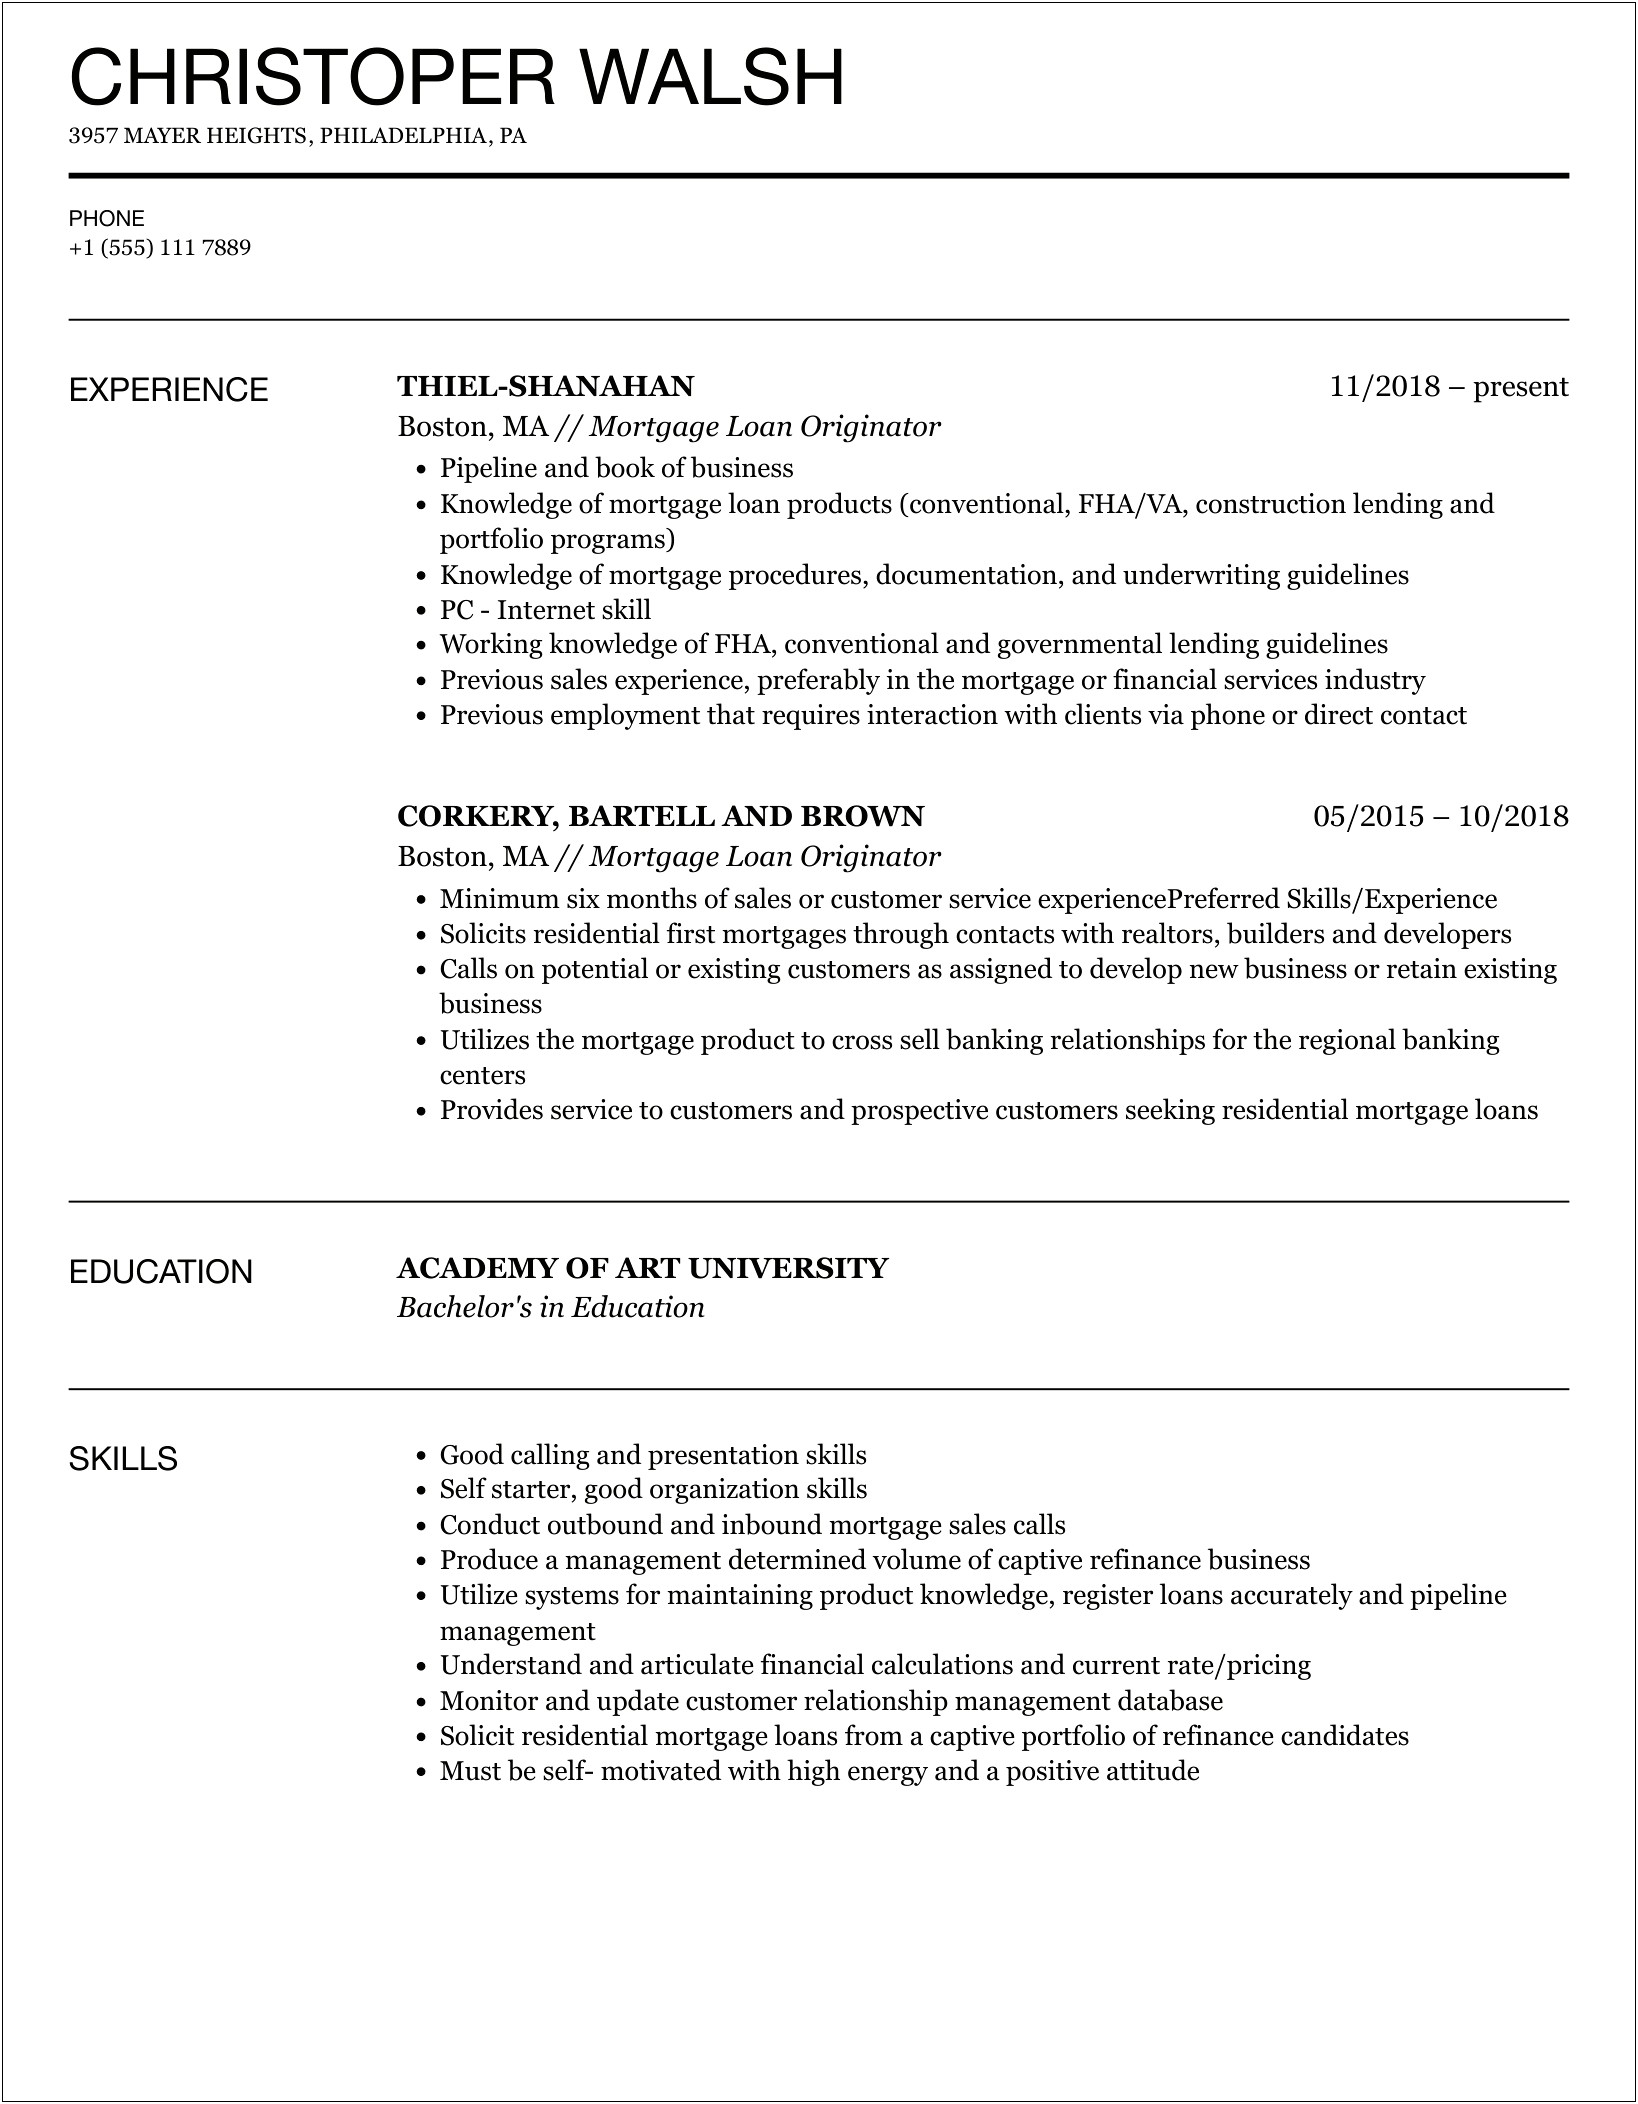 Mortgage Loan Originator Job Description For Resume